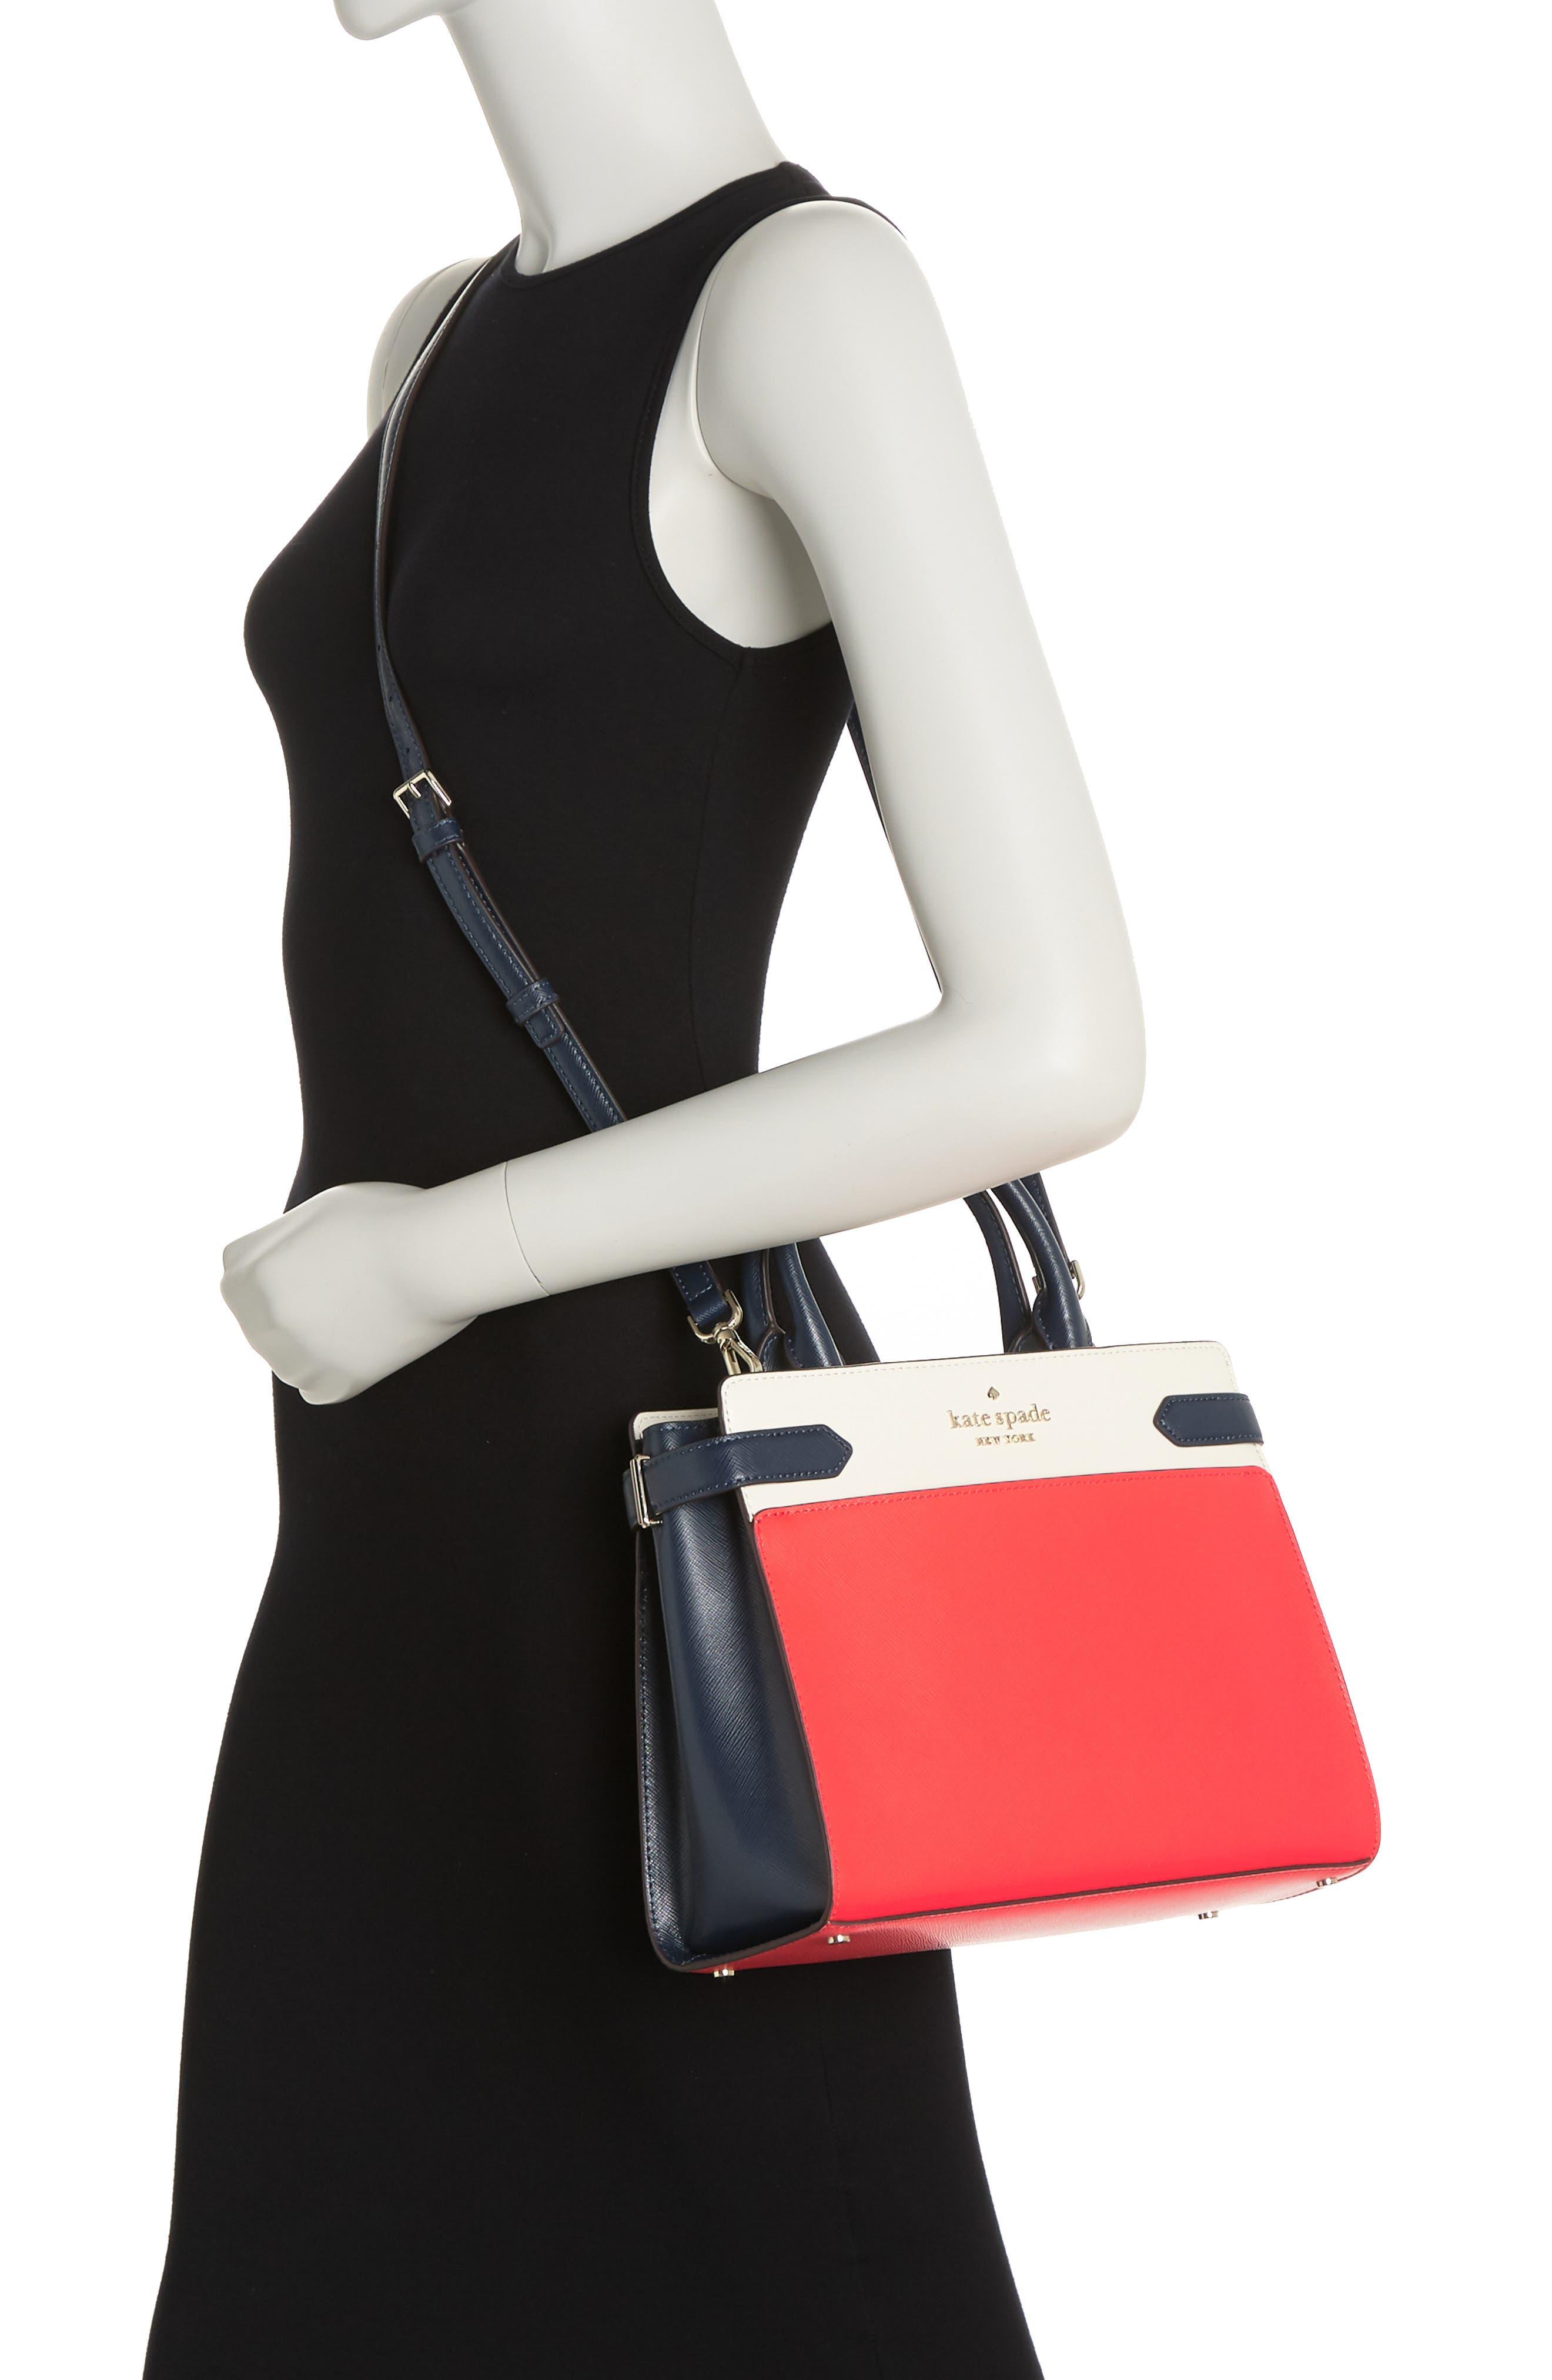 Kate Spade Staci Colorblock Medium Crossbody Satchel Handbag